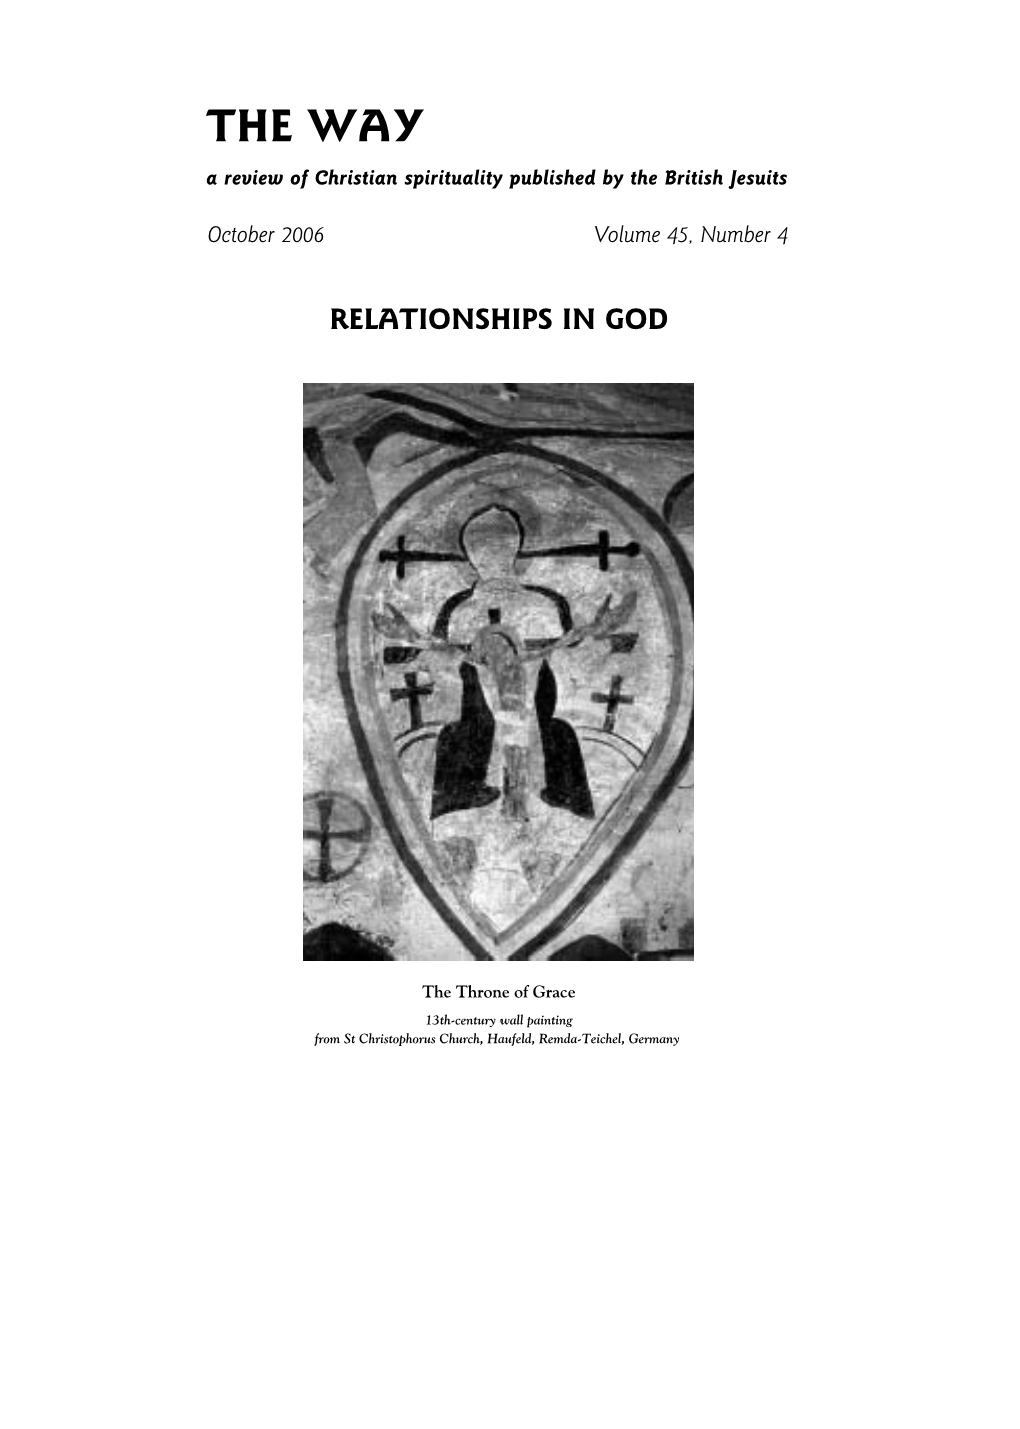 Ignatian Spirituality and Positive Psychology 41-58 Phyllis Zagano and C